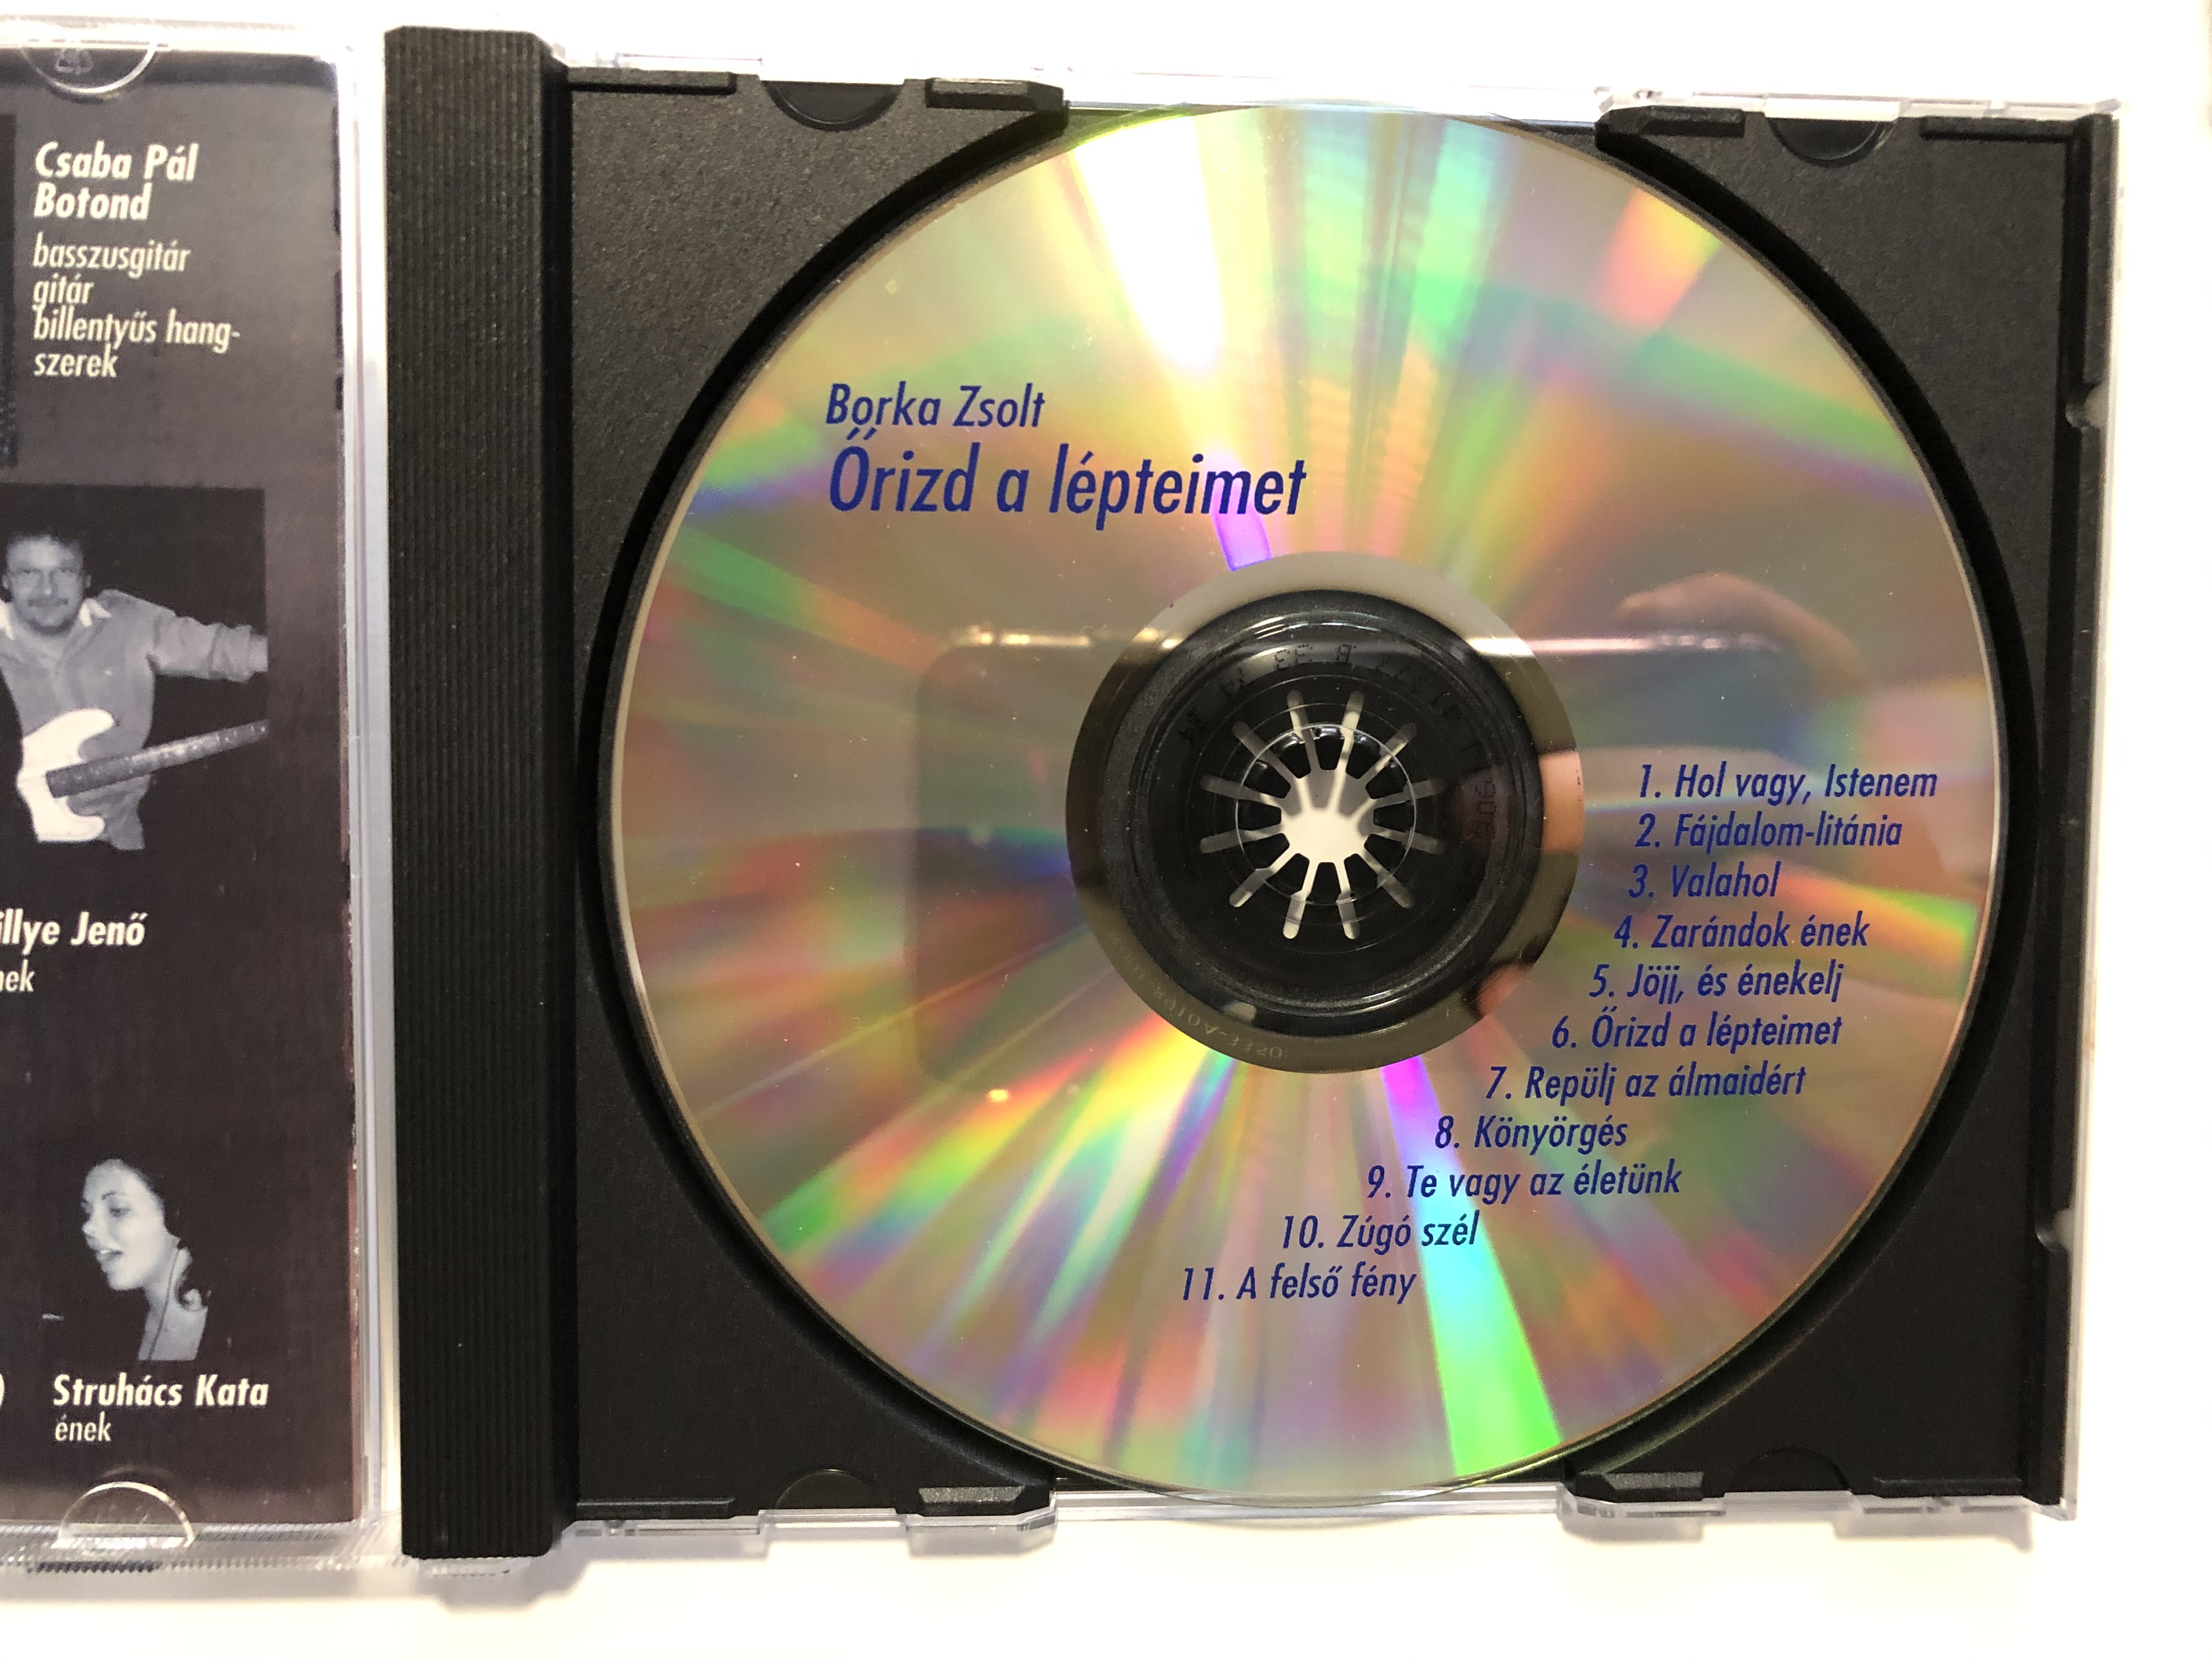 rizd-a-l-pteimet-borka-zsolt-docete-et-educate-alap-tv-ny-audio-cd-1999-3-.jpg